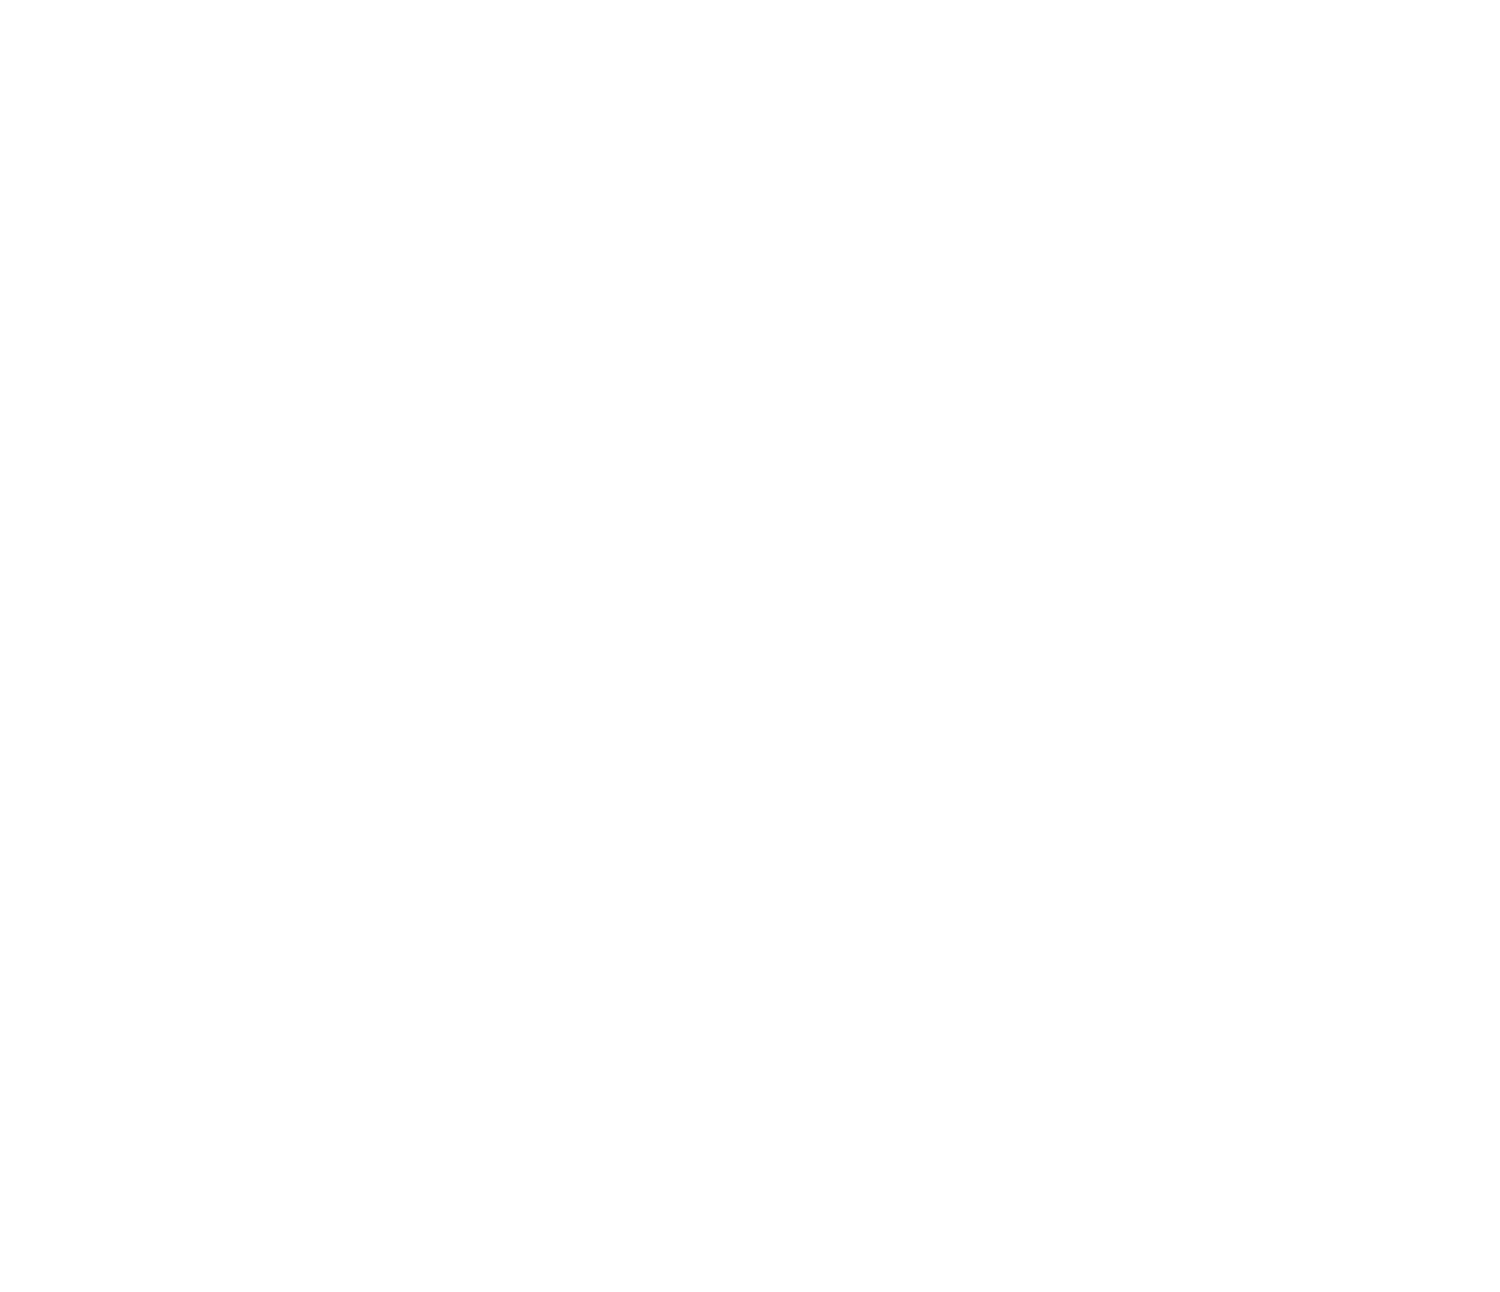 Gilchrist Farm